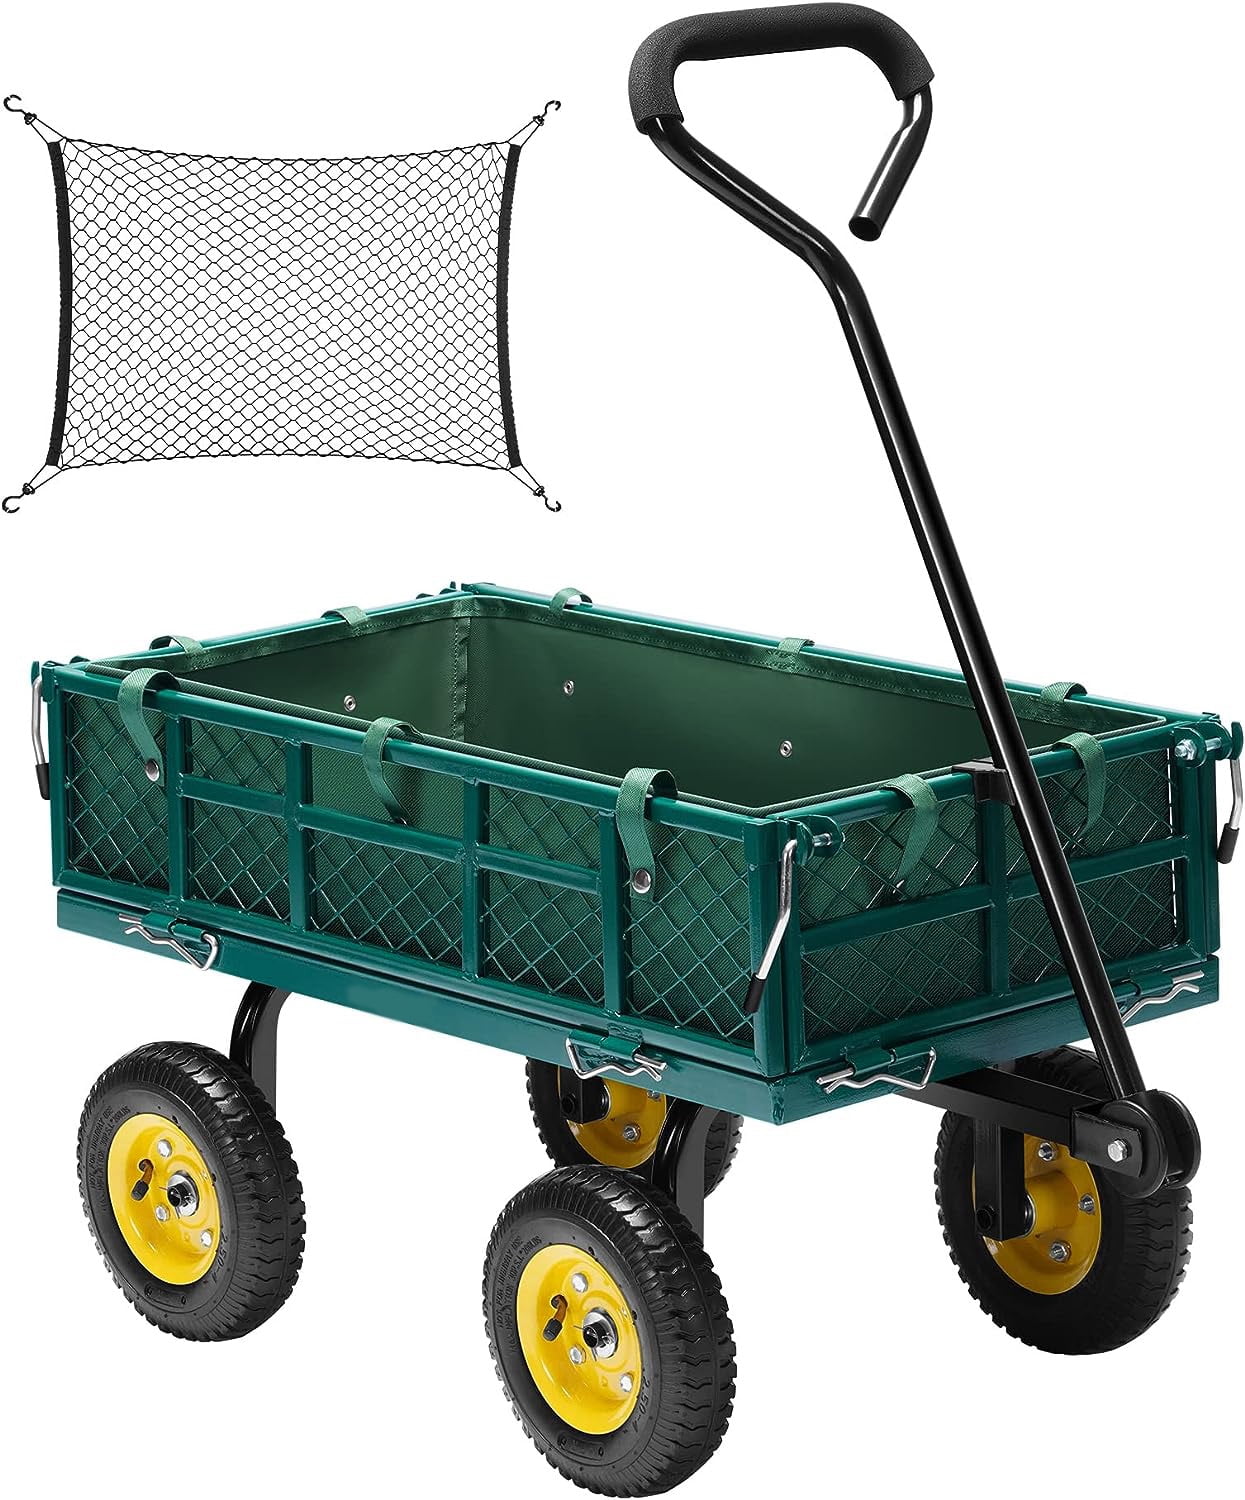 EZ-Haul All-Purpose Red Metal Garden Cart - Growers Supply